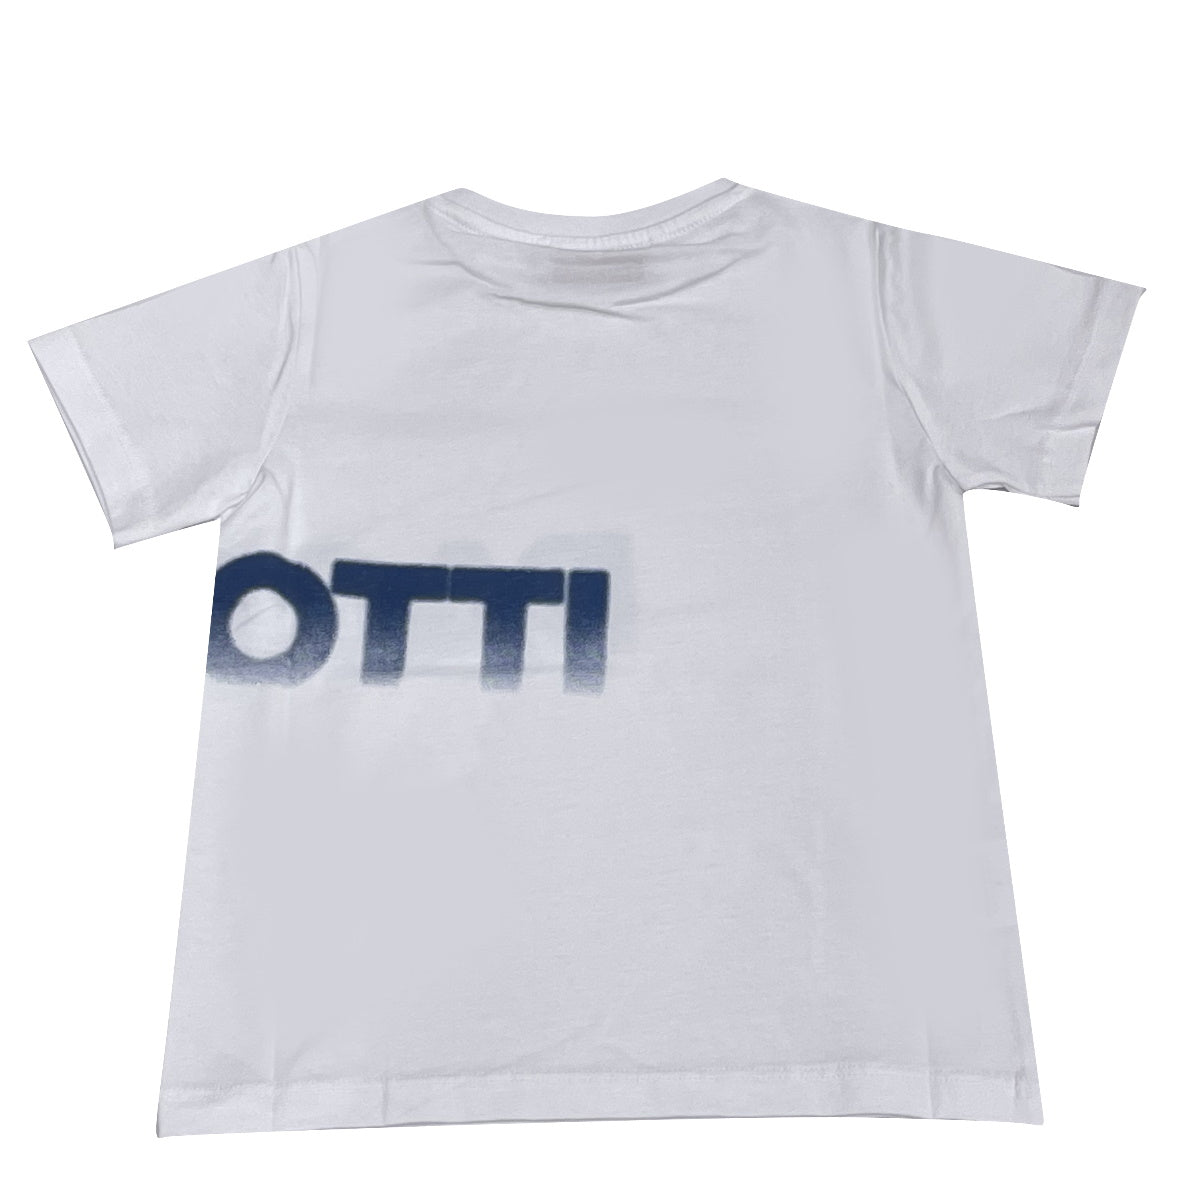 Cesare Paciotti t-shirt baby